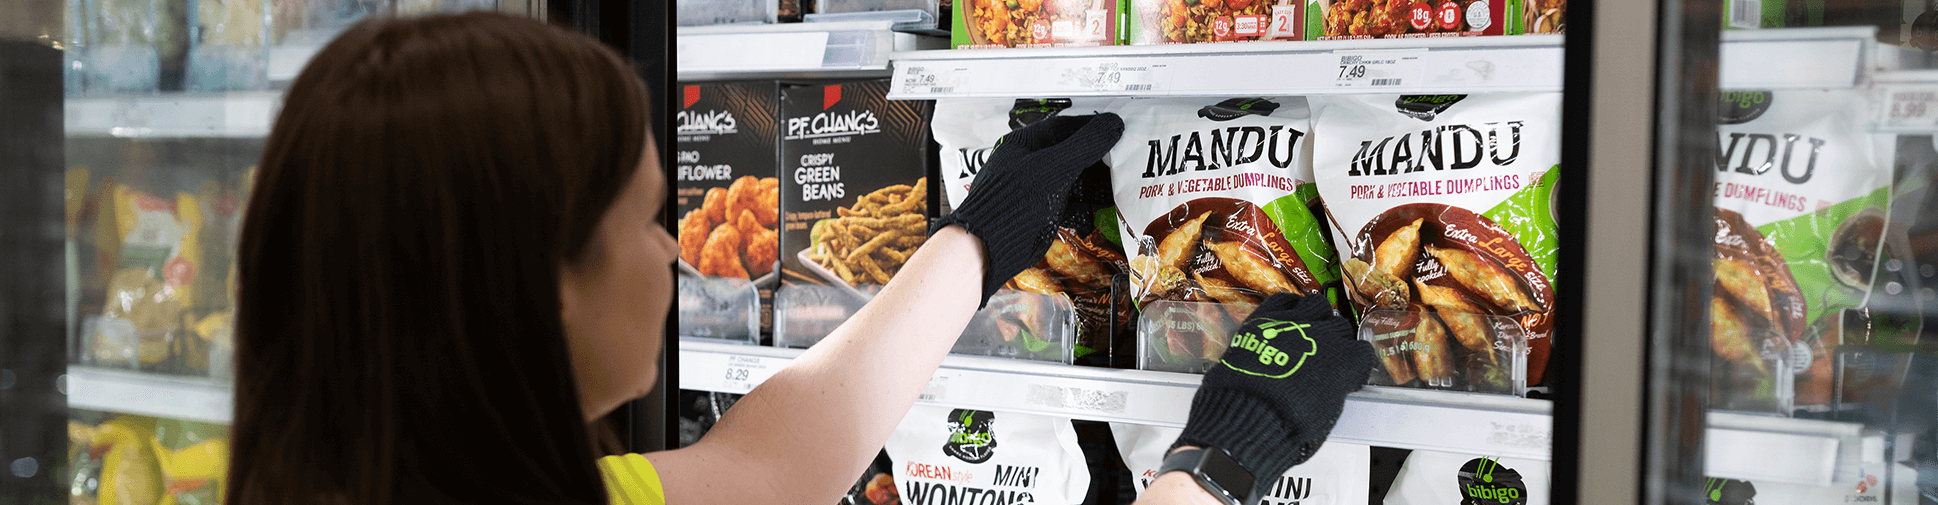 Woman employee stocking shelves while wearing gloves